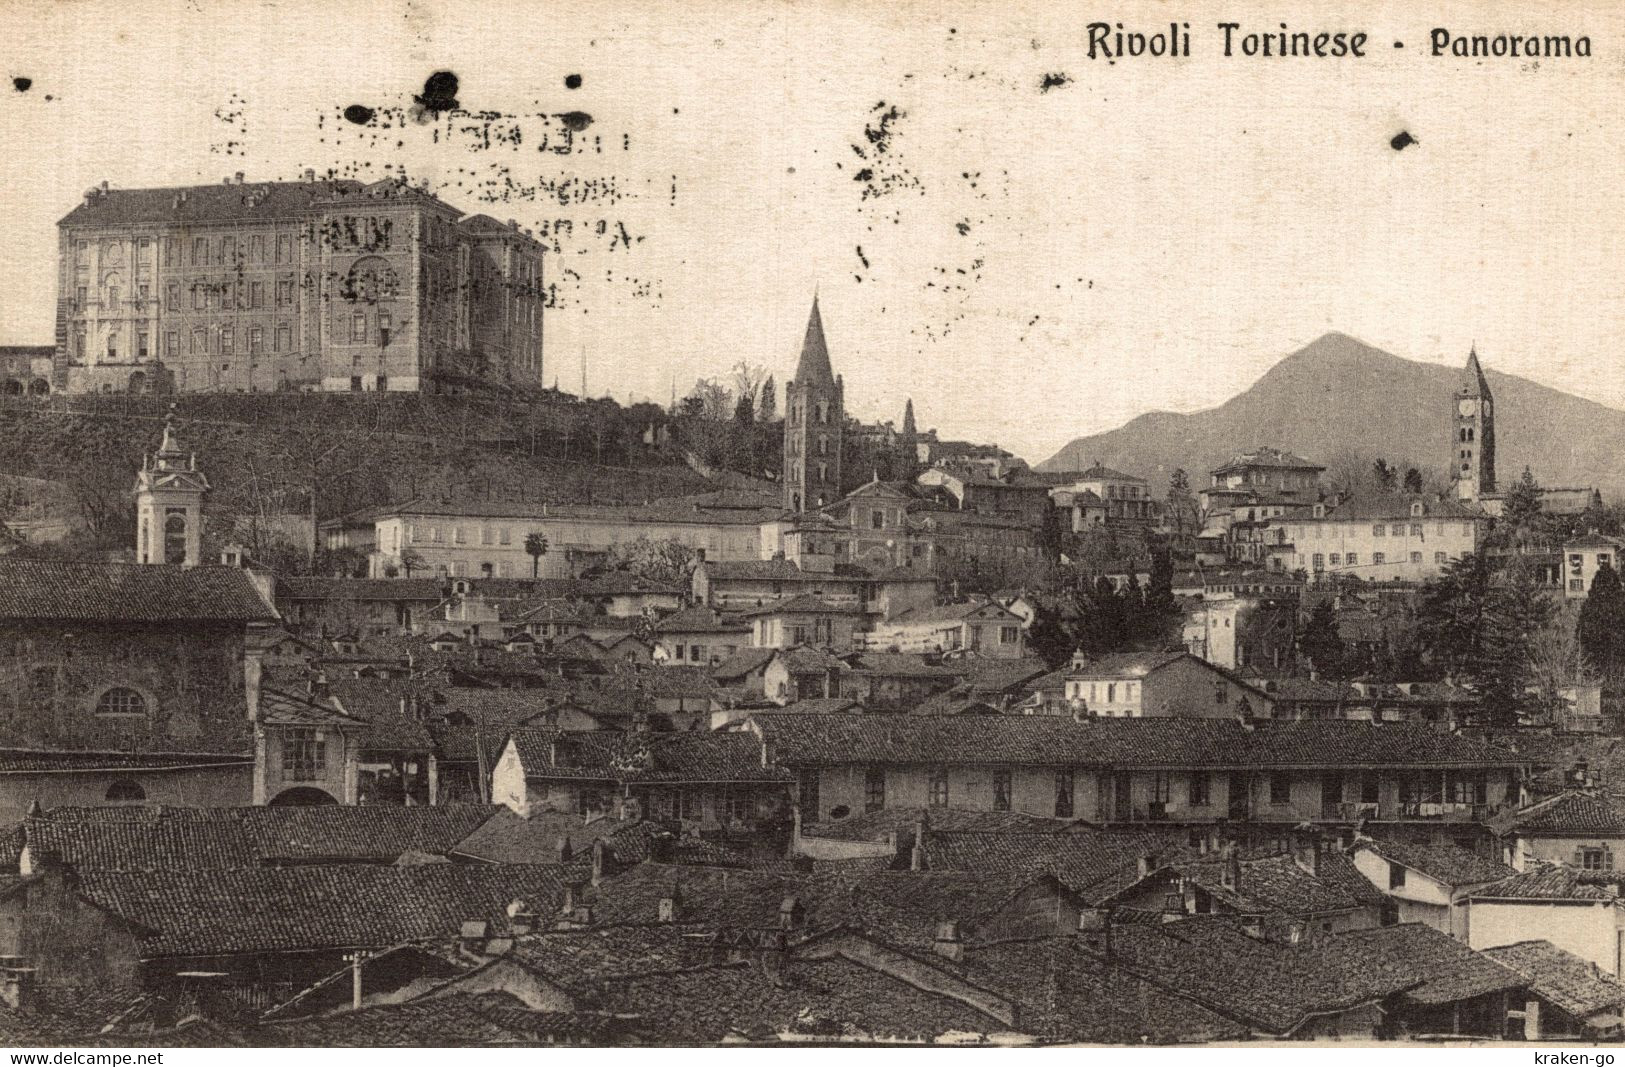 RIVOLI, Torino - Panorama - VG + Targhetta Postale - #026 - Rivoli